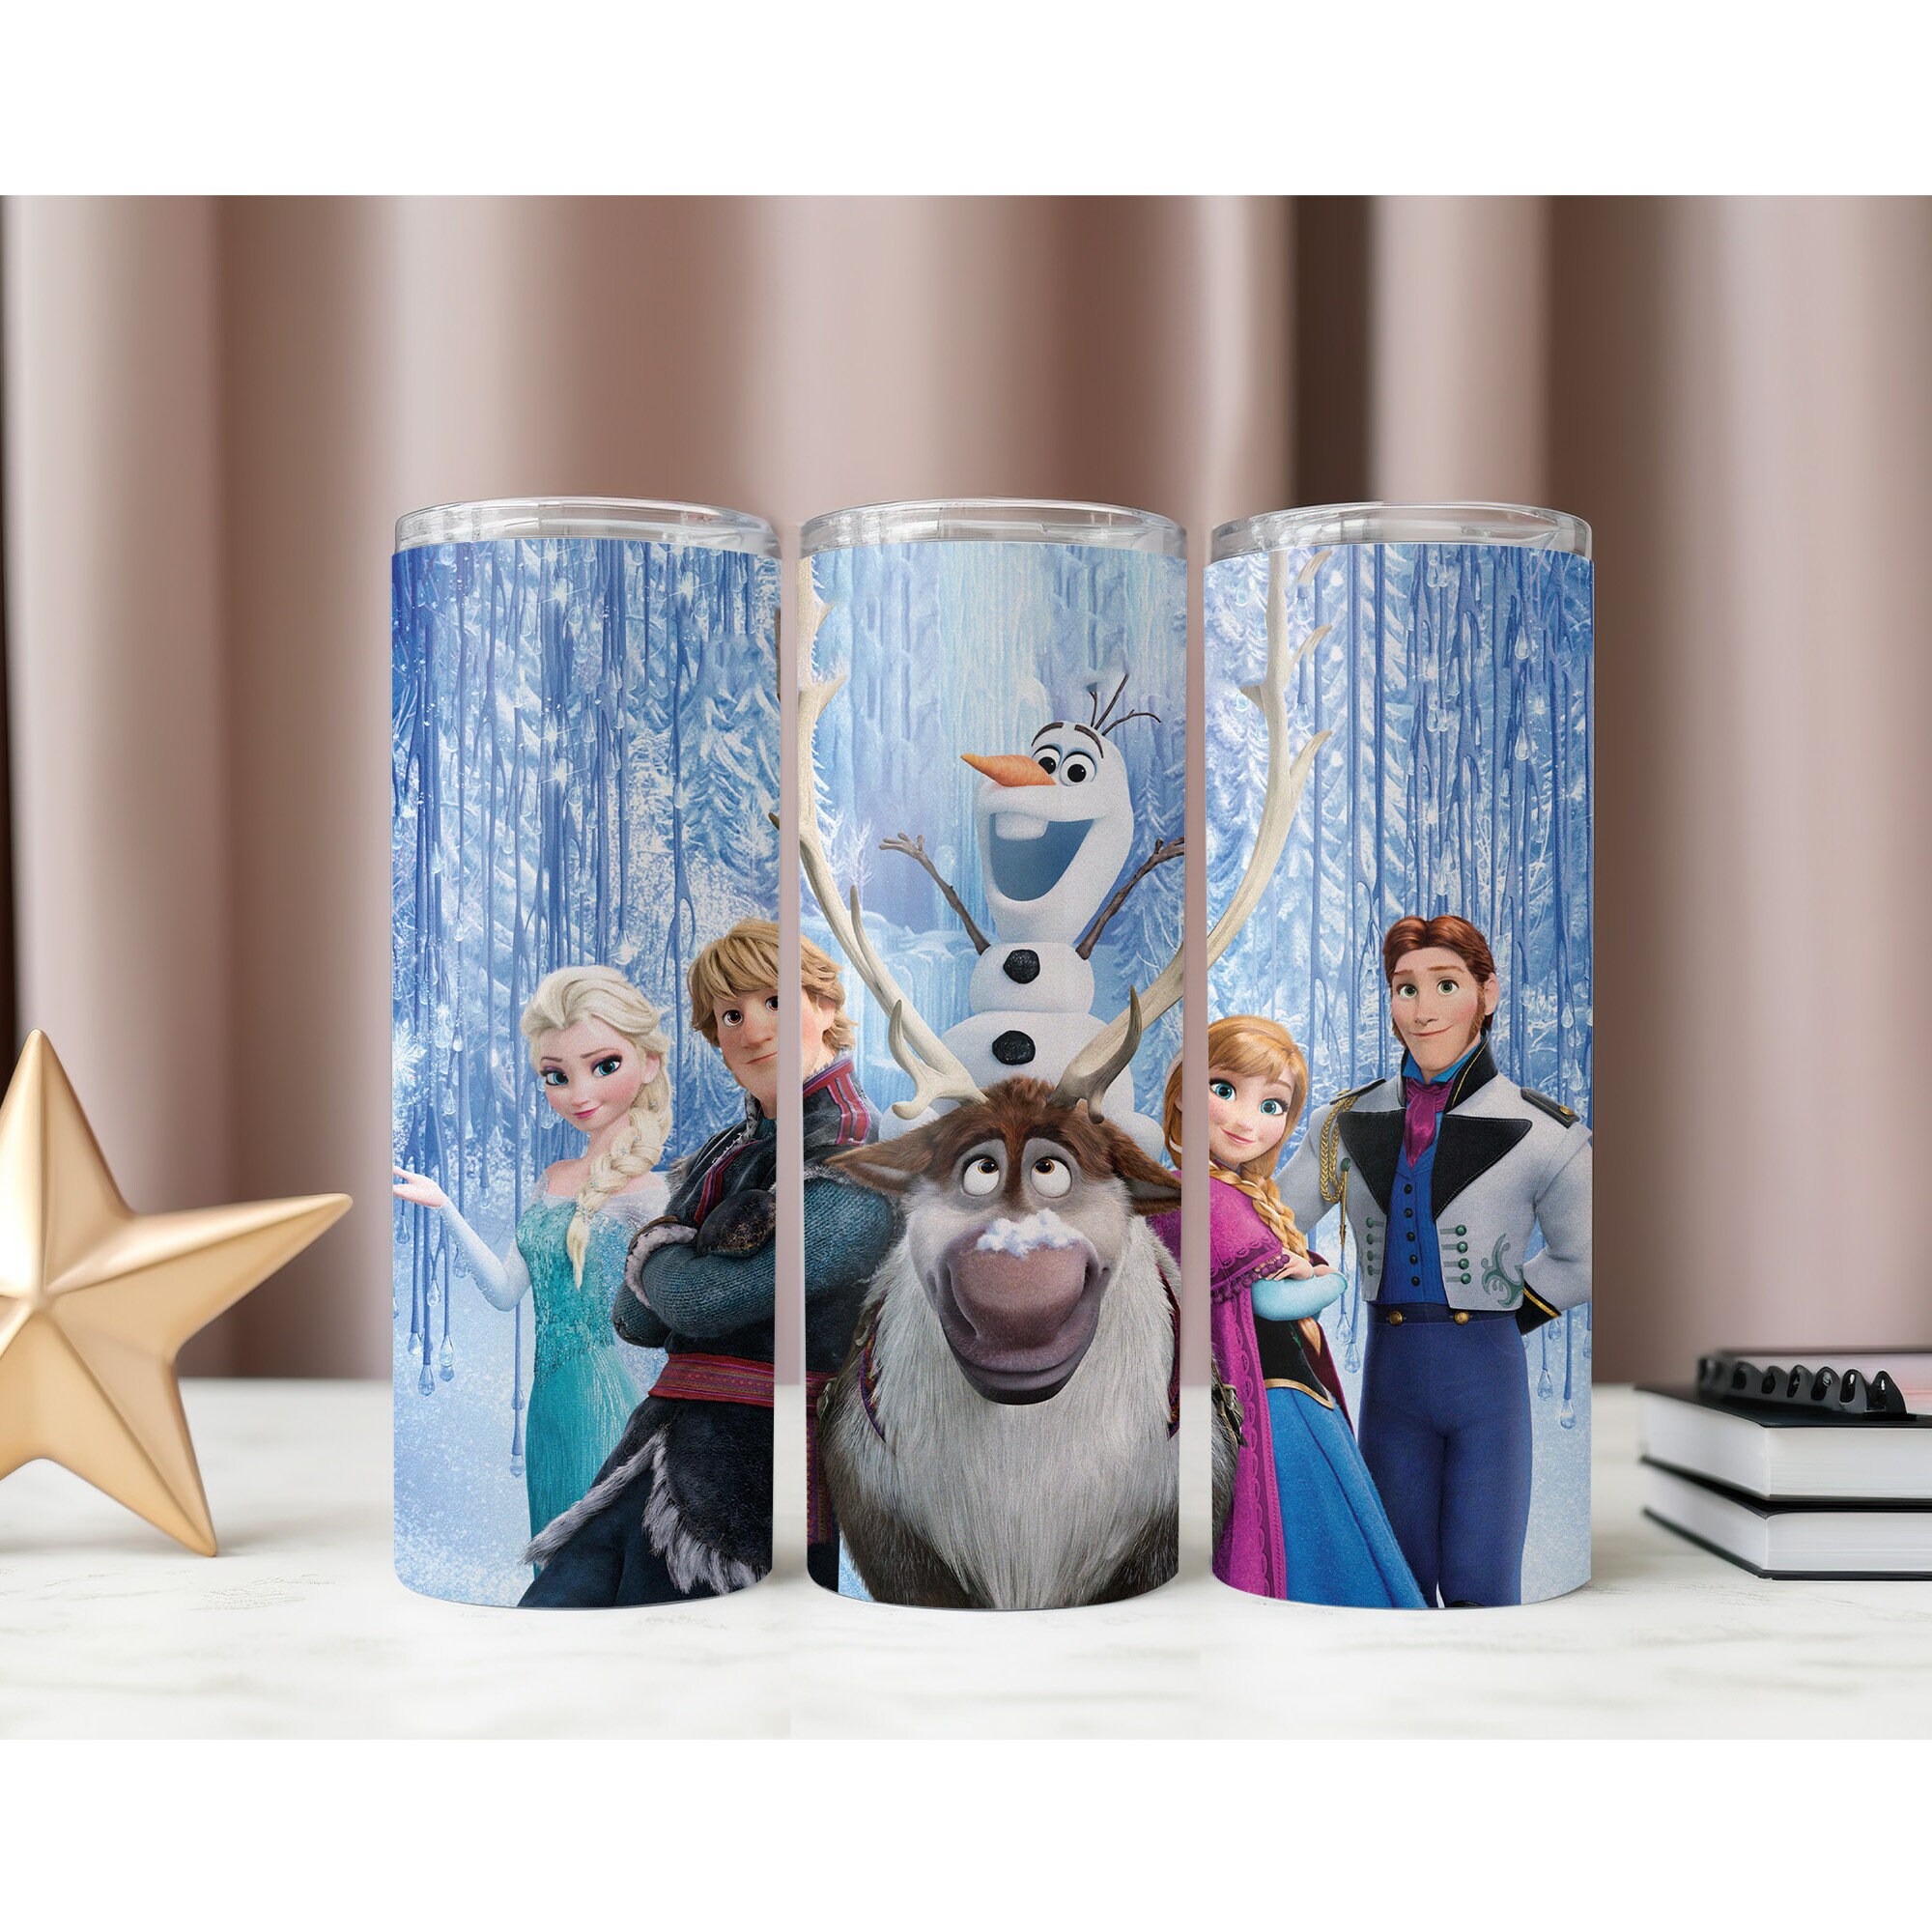 Zak Disney Frozen Elsa And Olaf Stainless Steel Water Bottle 15.5 Oz., Water  Bottles, Sports & Outdoors